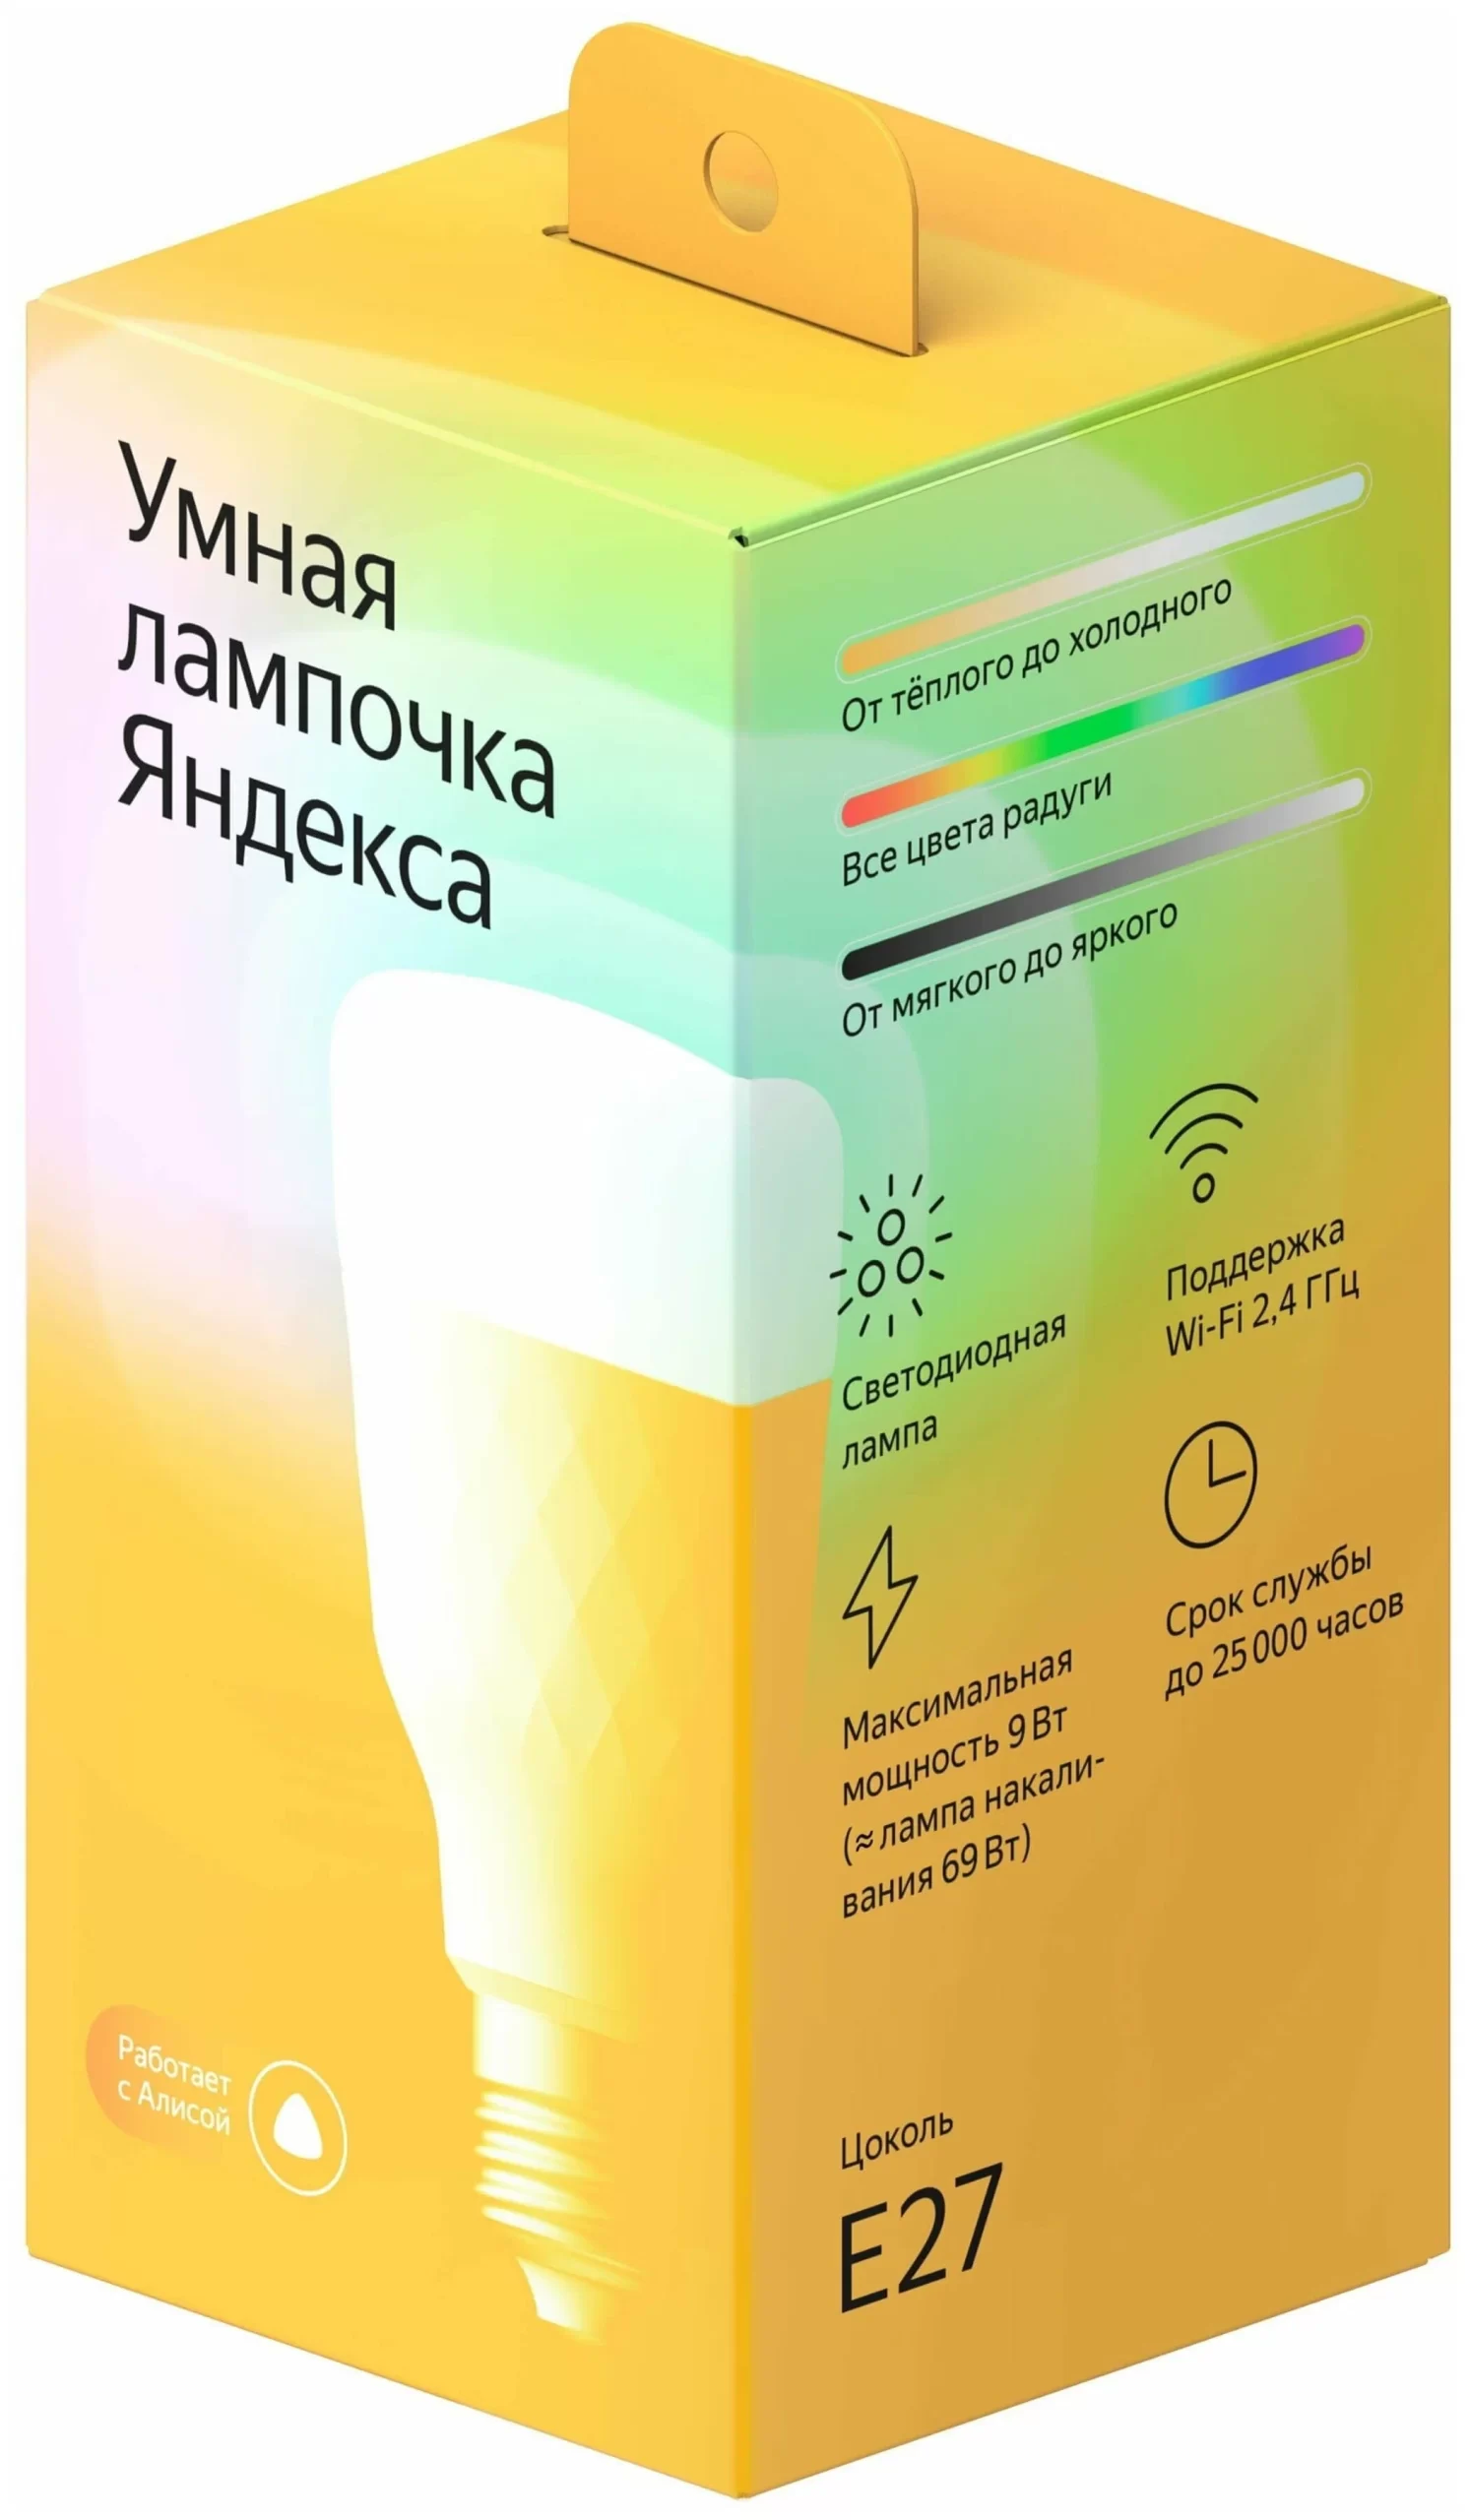 Умная лампочка Яндекса цветная, 6500К, E27